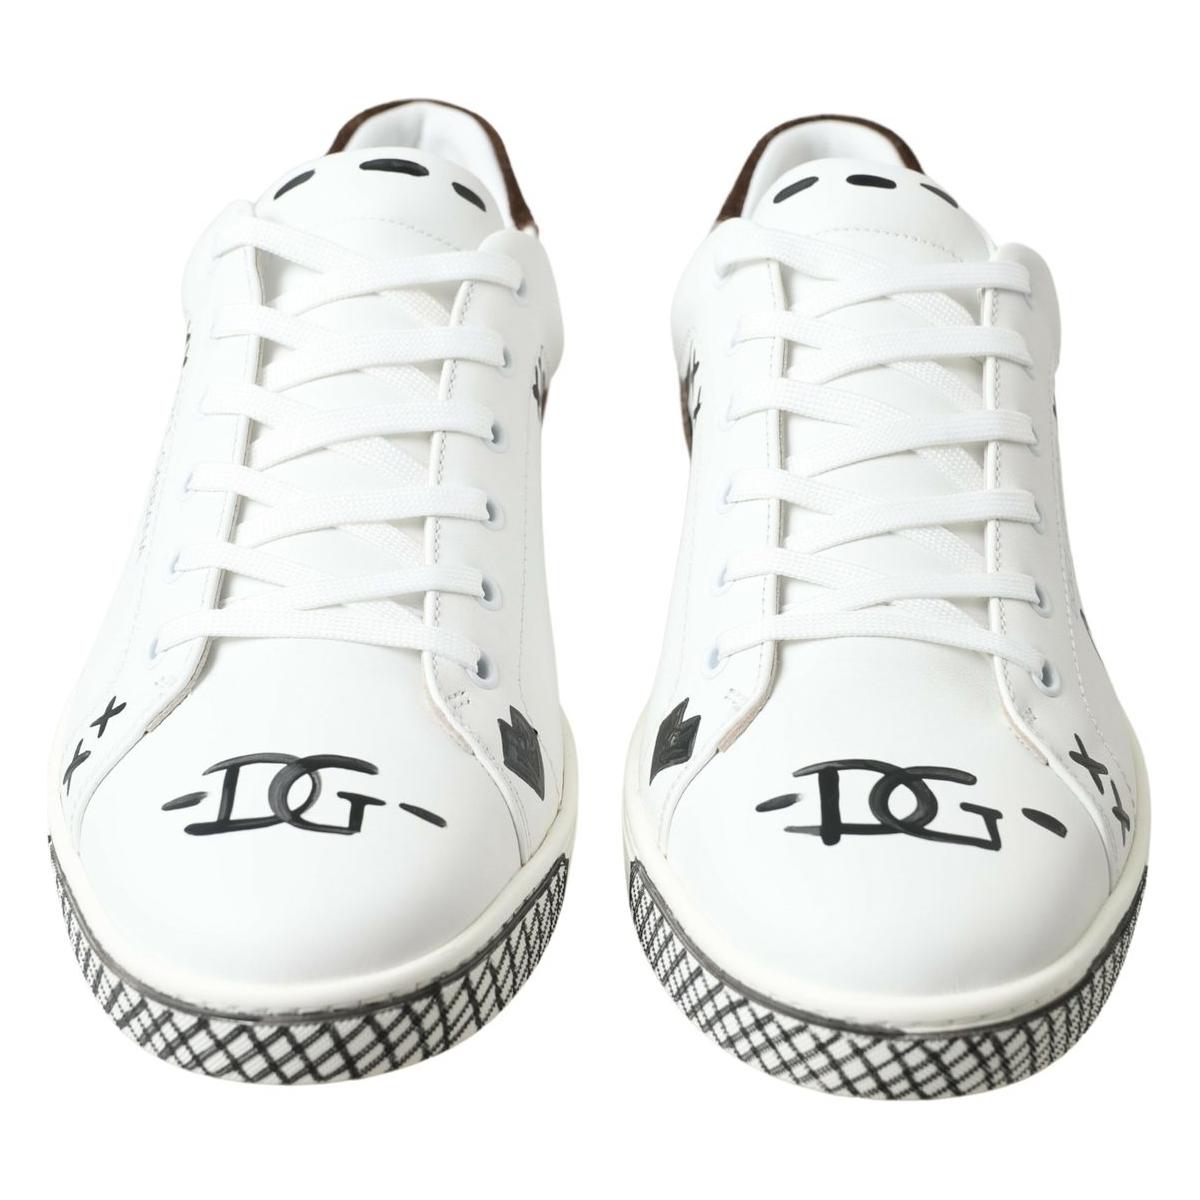 Dolce & Gabbana Sleek White Leather Casual Sneakers white-leather-brown-love-casual-sneakers